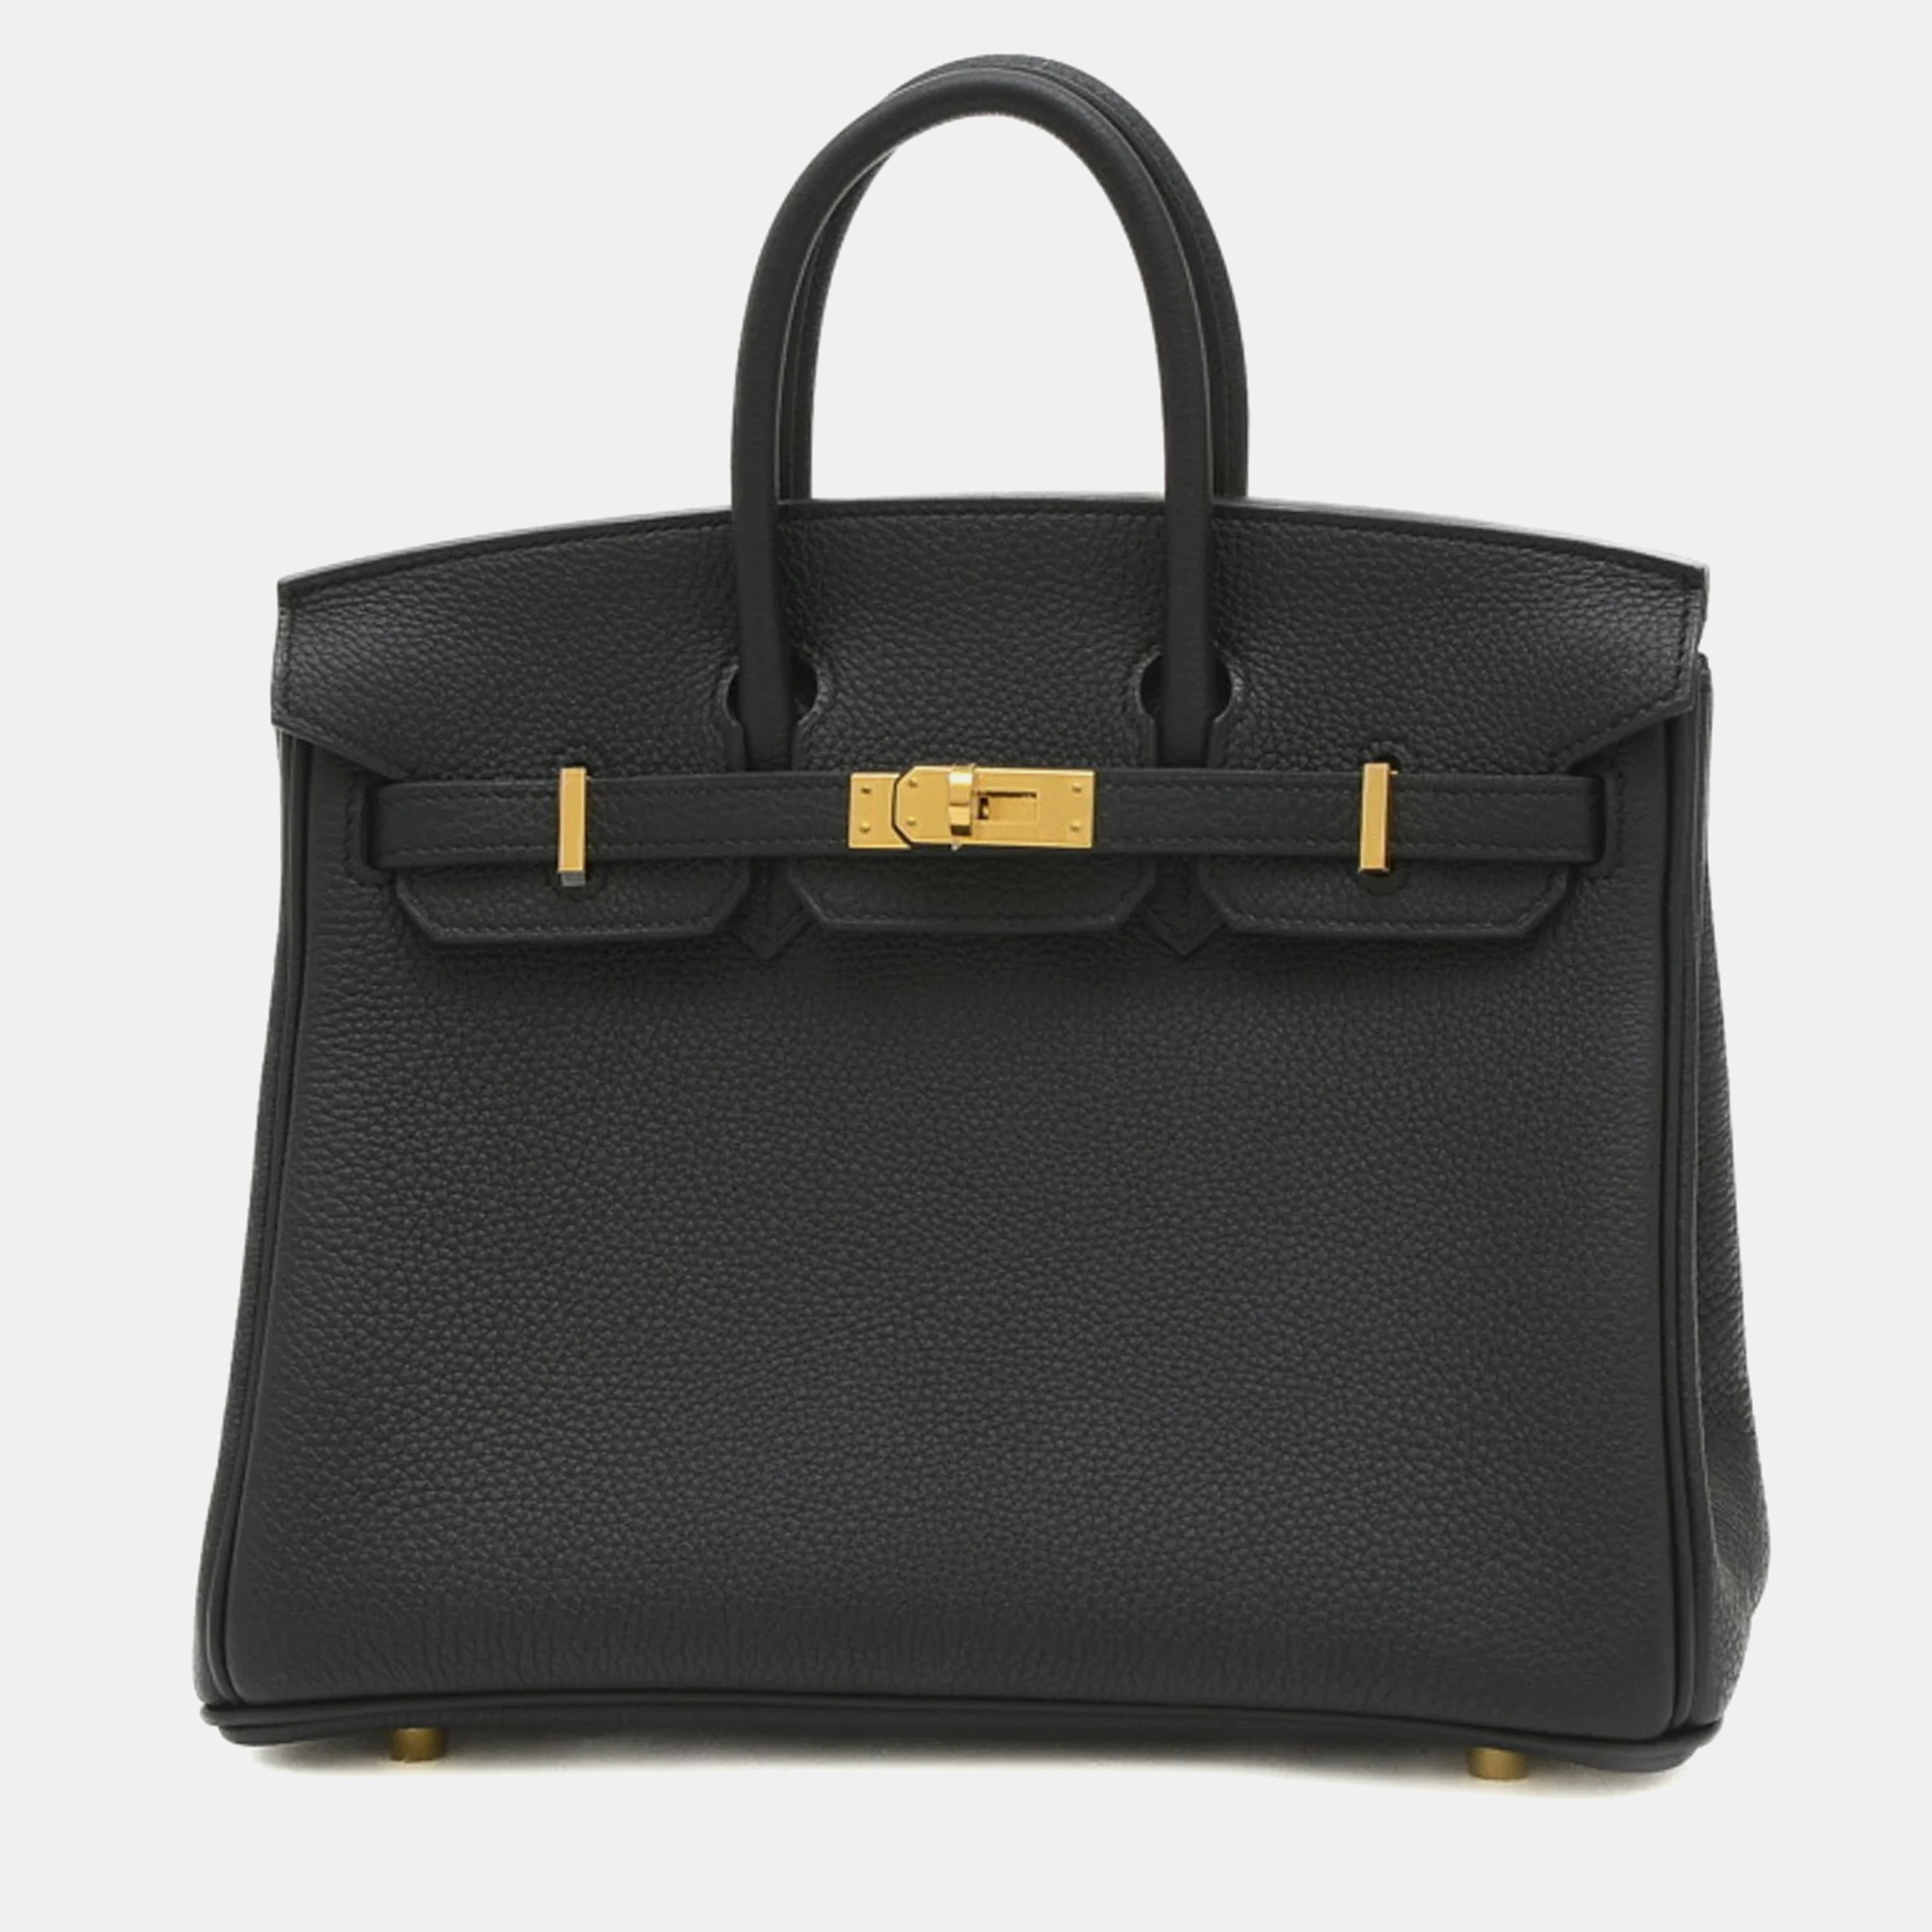 Hermes black togo birkin 25 handbag